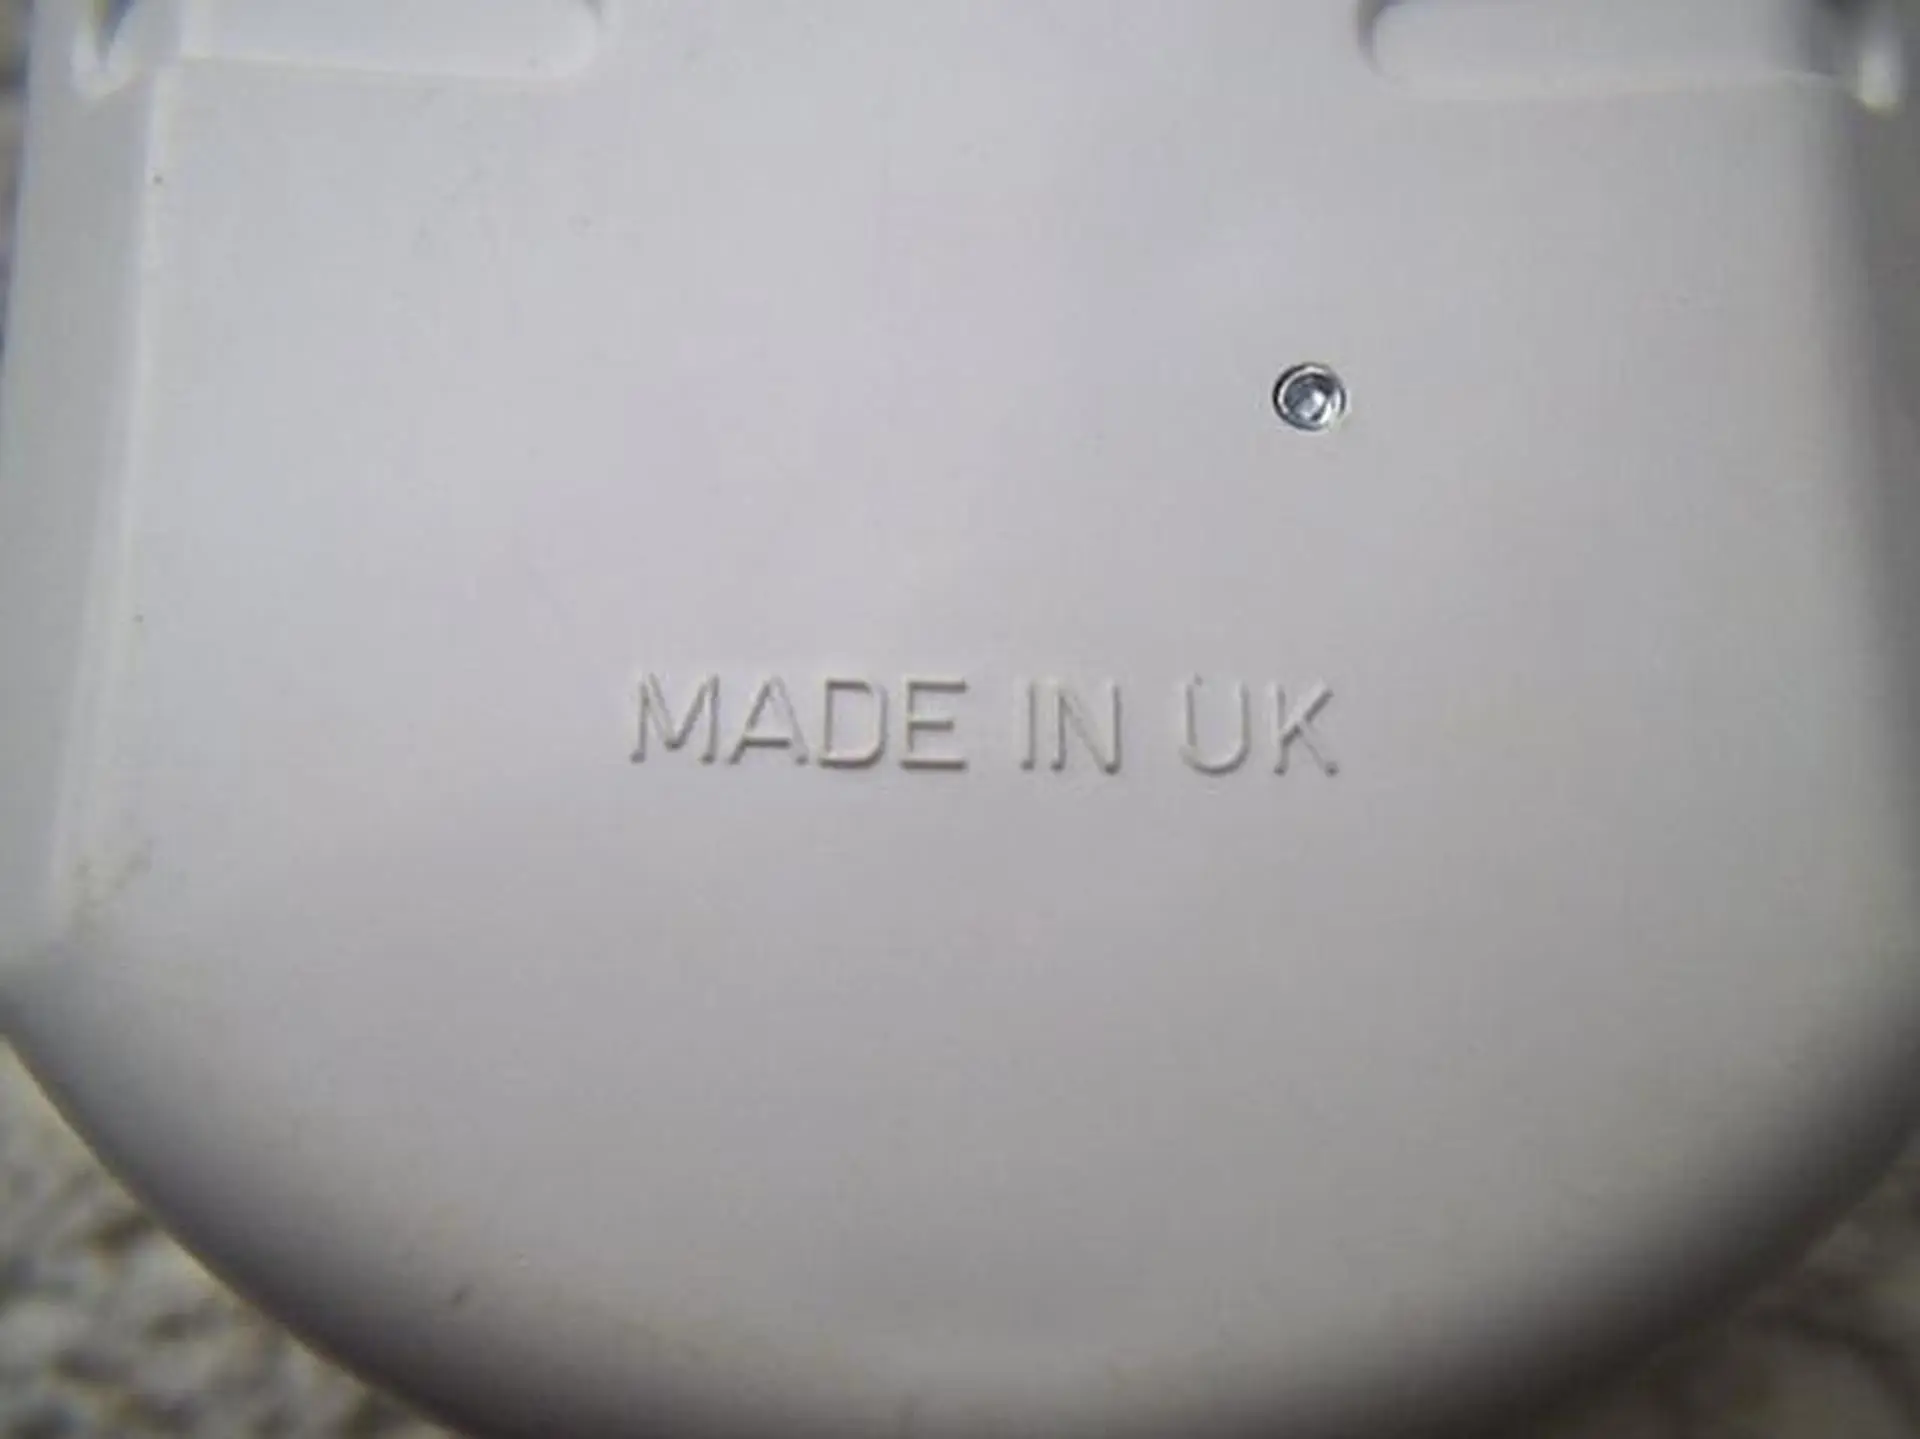 Made in UK.